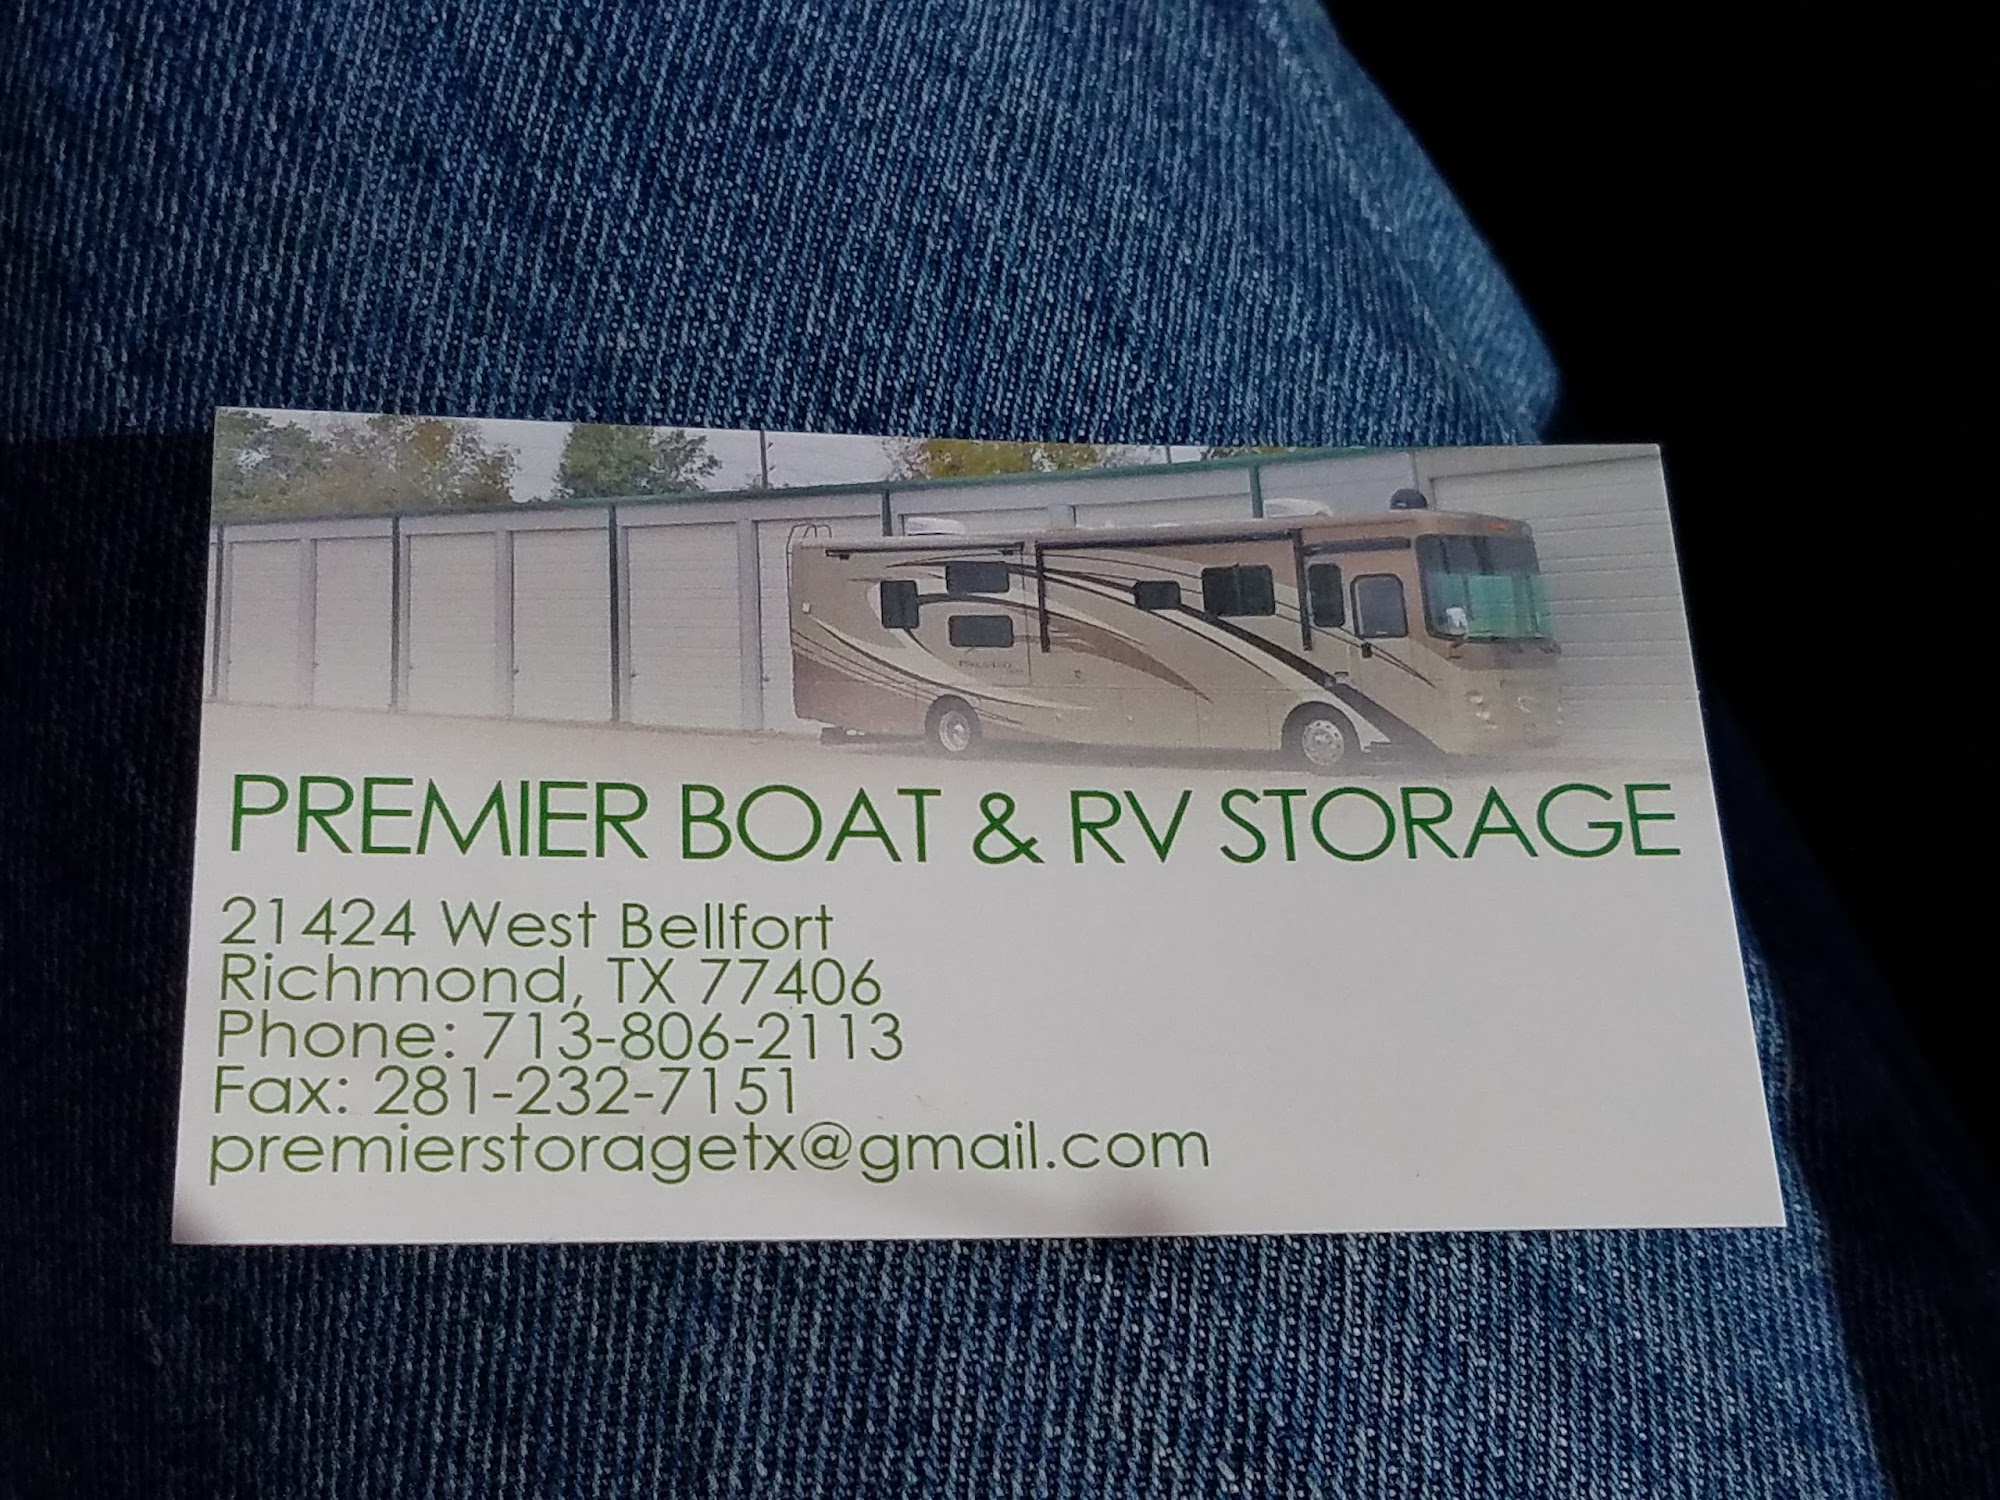 Premier Boat & RV Storage